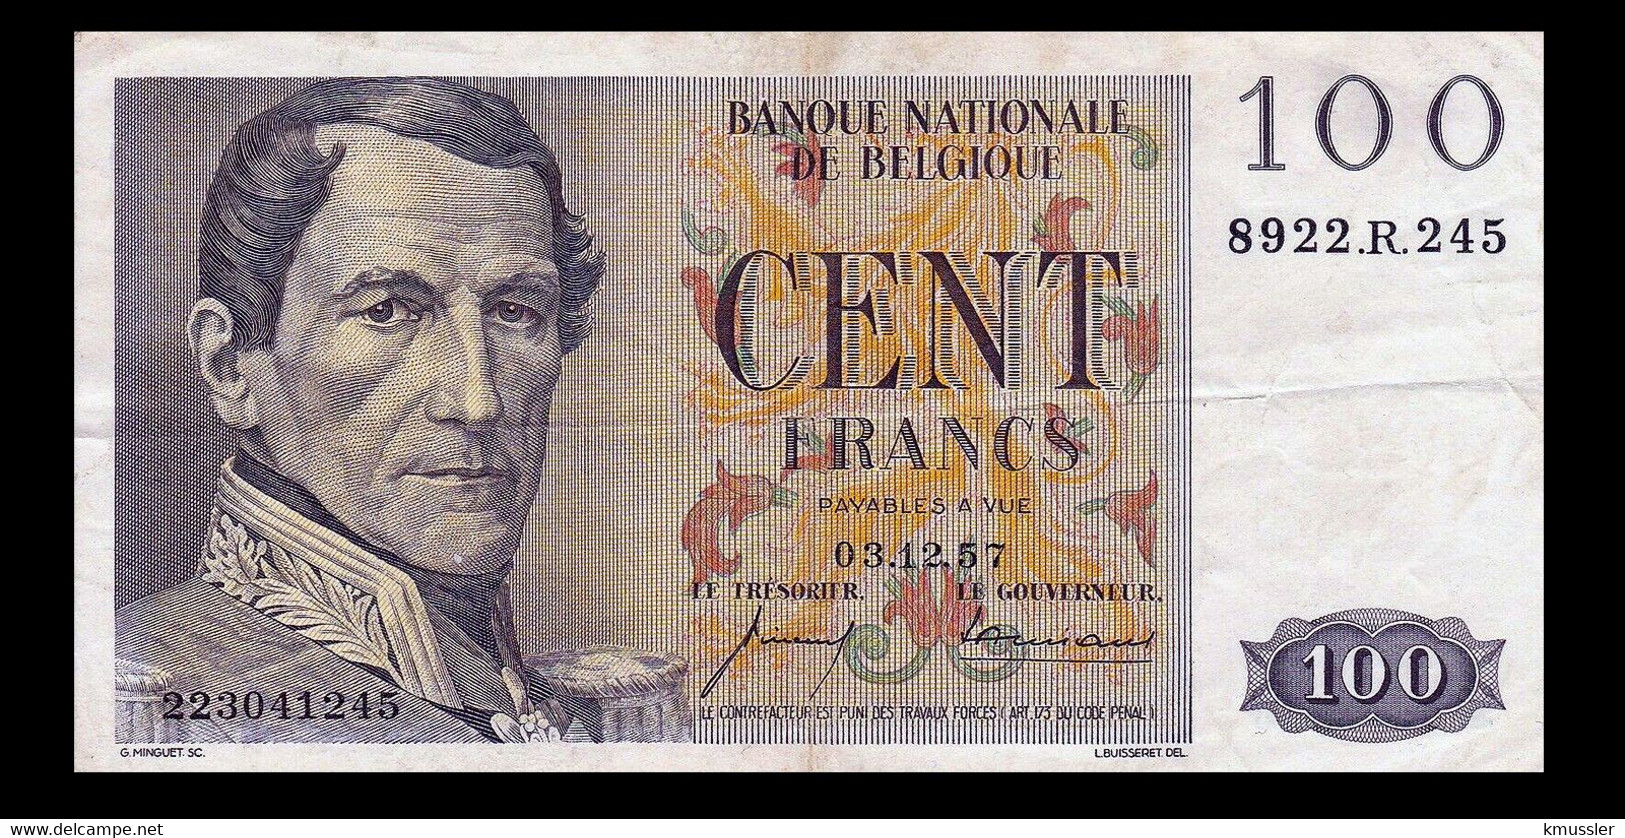 # # # Banknote Belgien (Belgium) 100 Francs 1957 # # # - 100 Francs